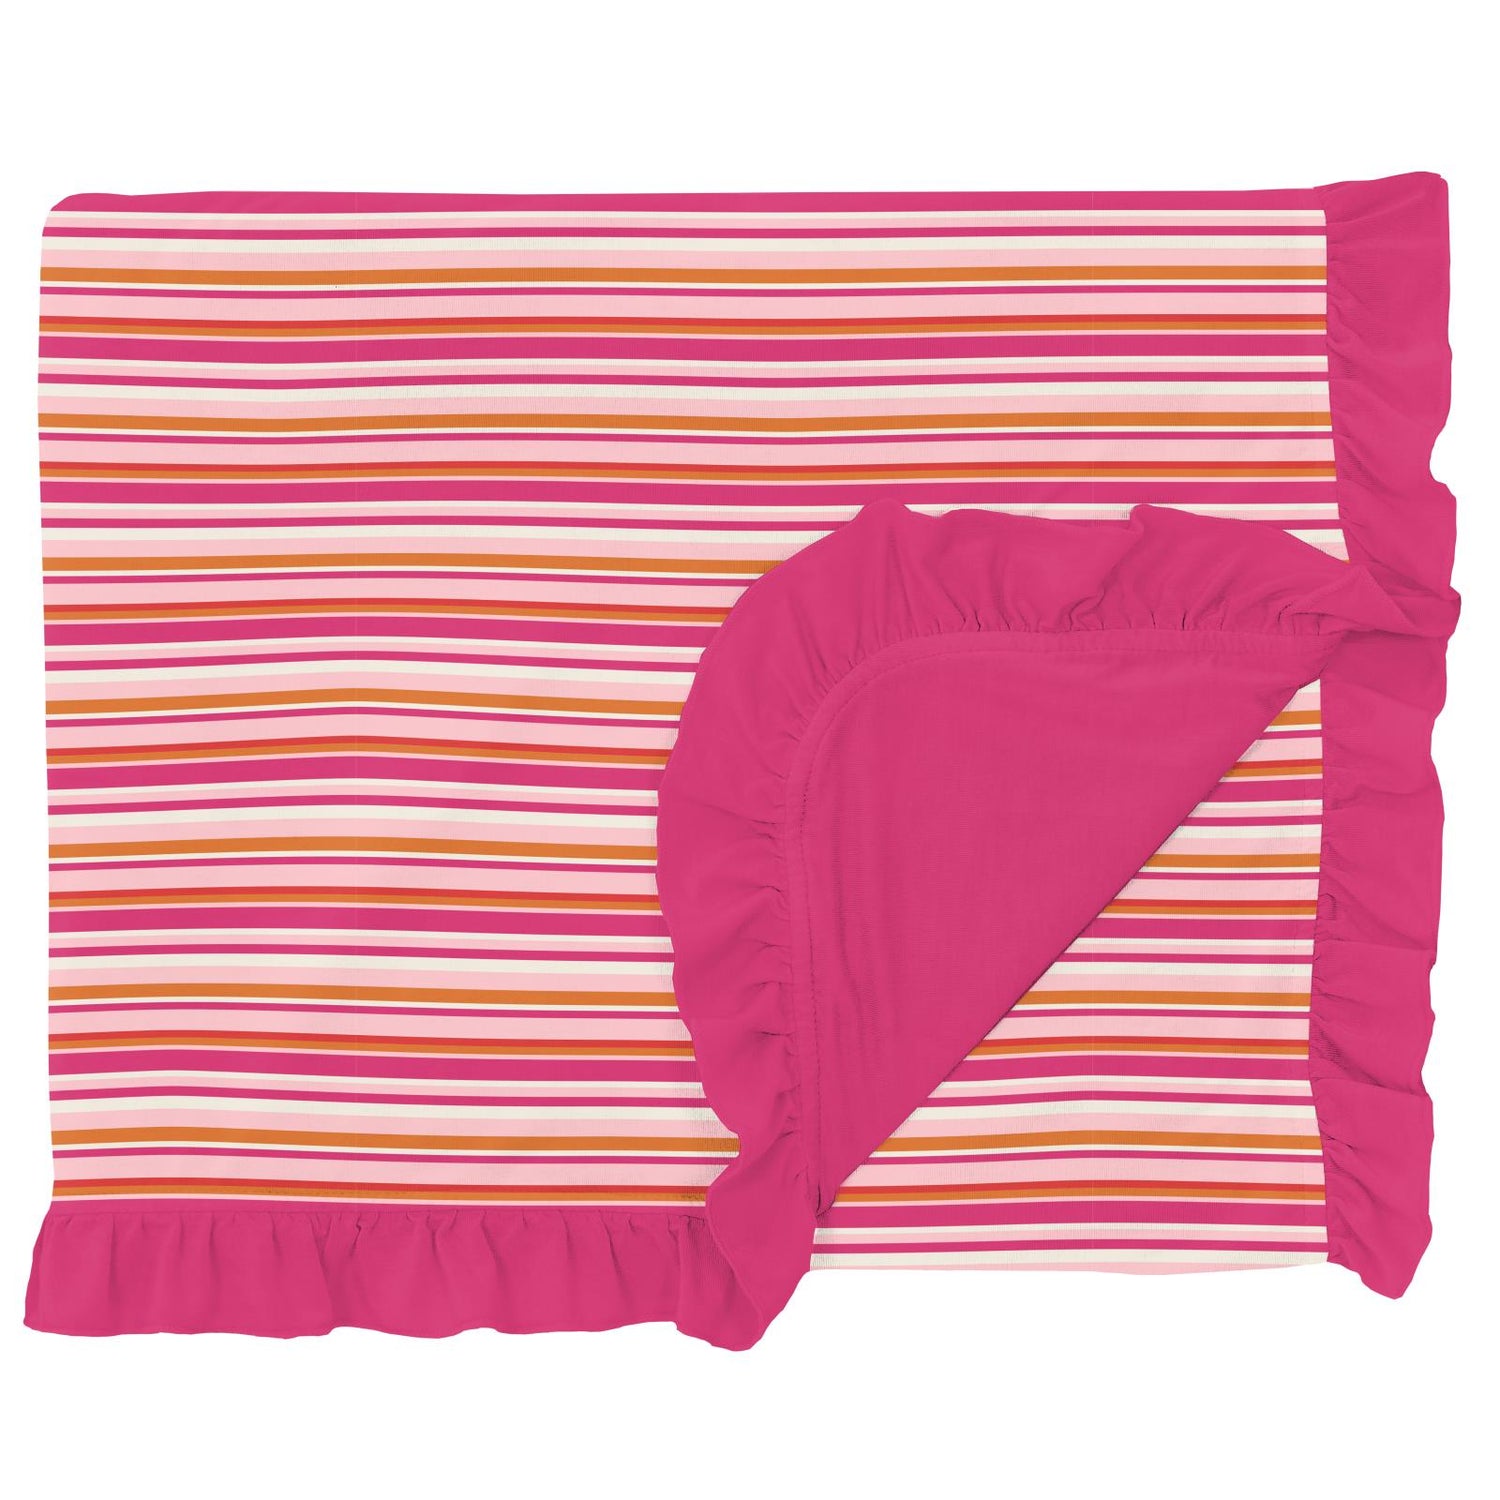 Print Ruffle Double Layer Throw Blanket in Anniversary Sunset Stripe